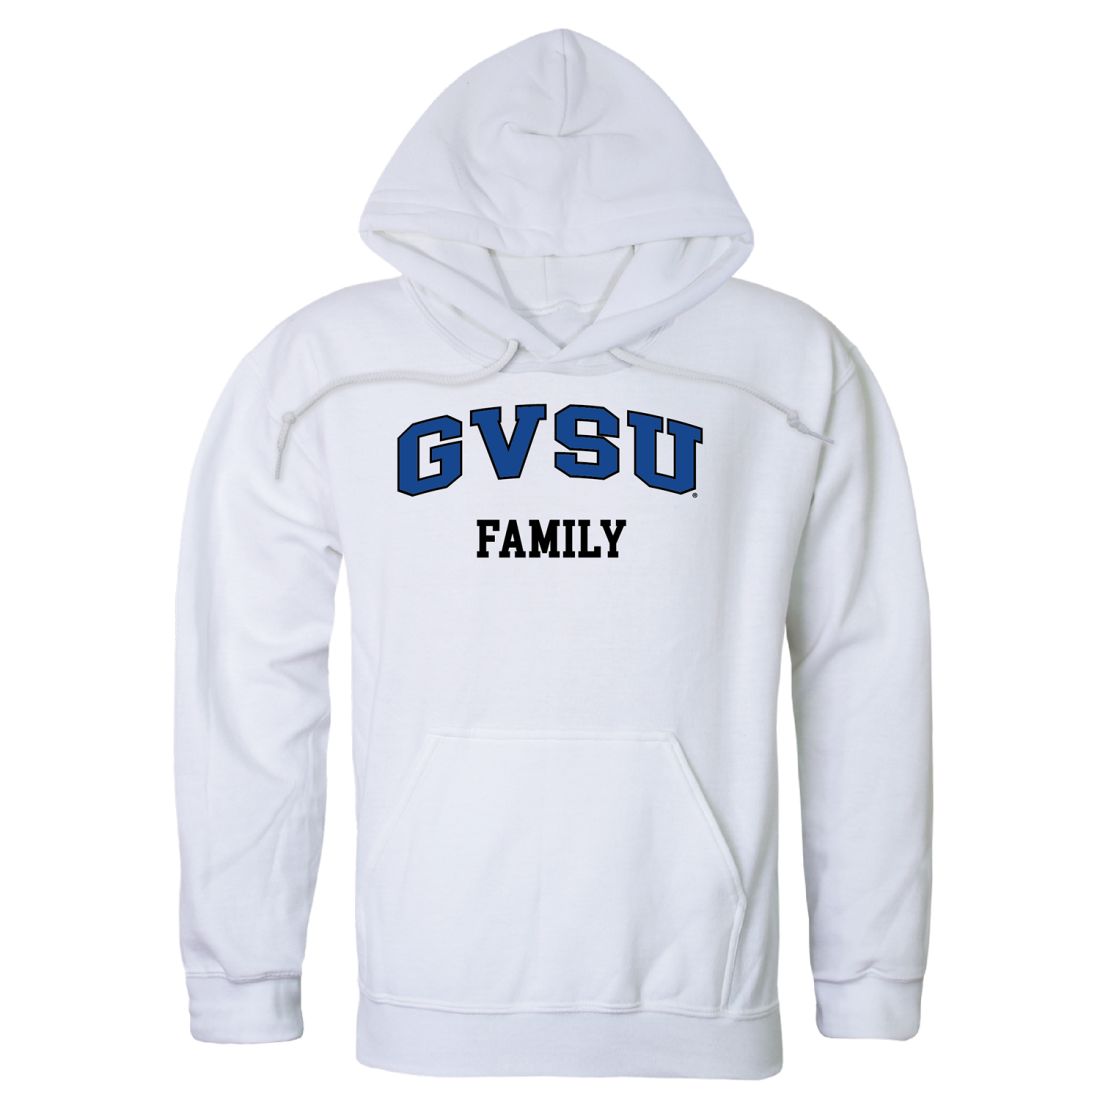 GVSU Grand Valley State University Lakers Family Hoodie Sweatshirts